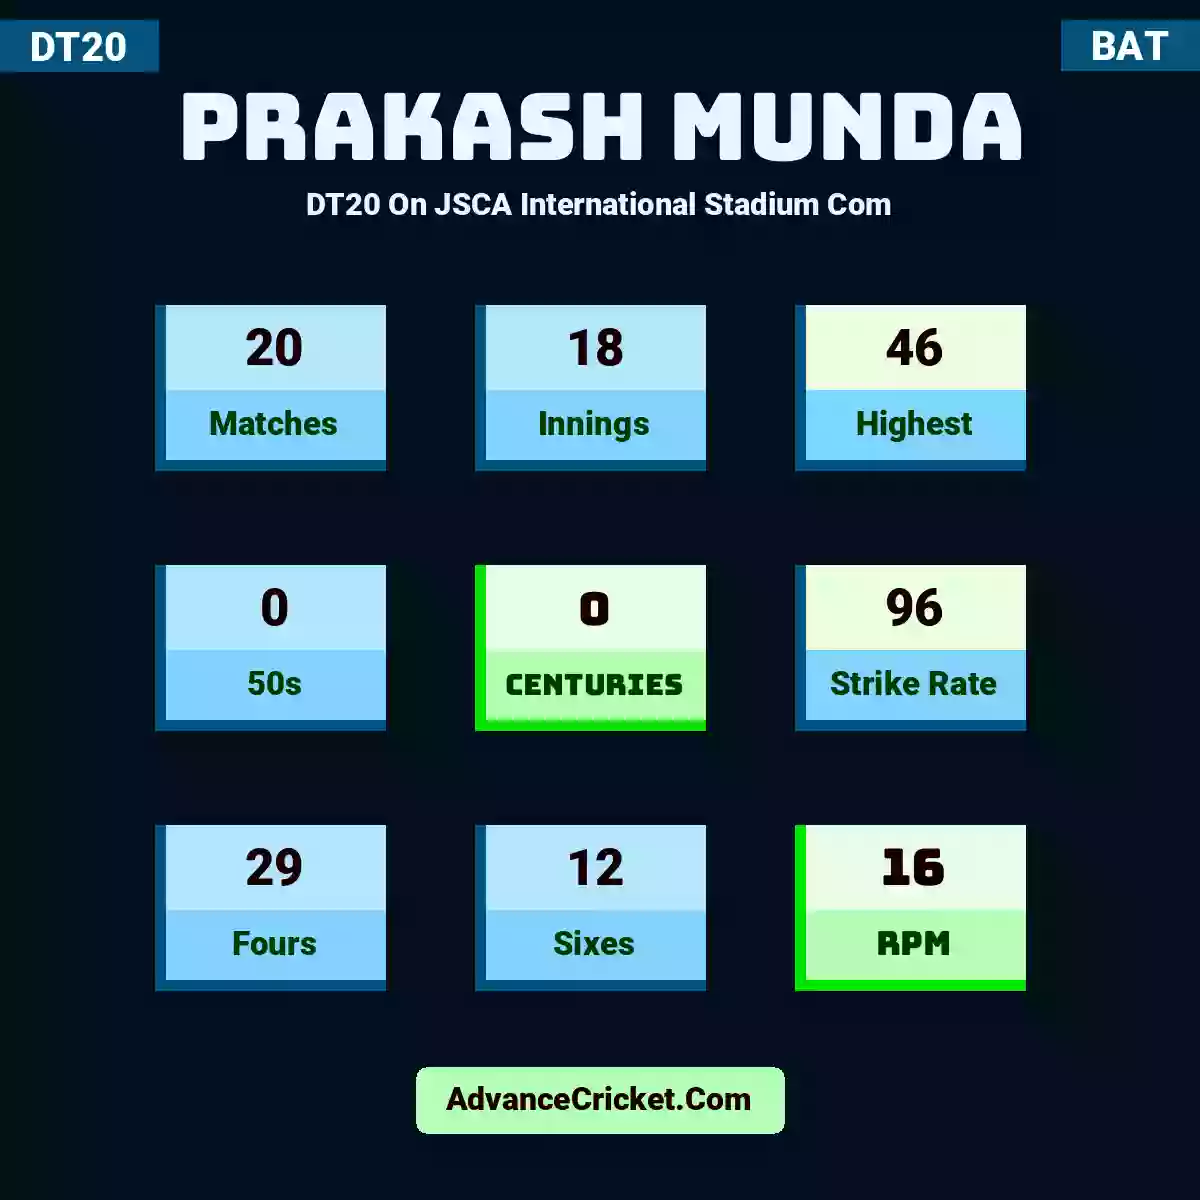 Prakash Munda DT20  On JSCA International Stadium Com, Prakash Munda played 20 matches, scored 46 runs as highest, 0 half-centuries, and 0 centuries, with a strike rate of 96. P.Munda hit 29 fours and 12 sixes, with an RPM of 16.